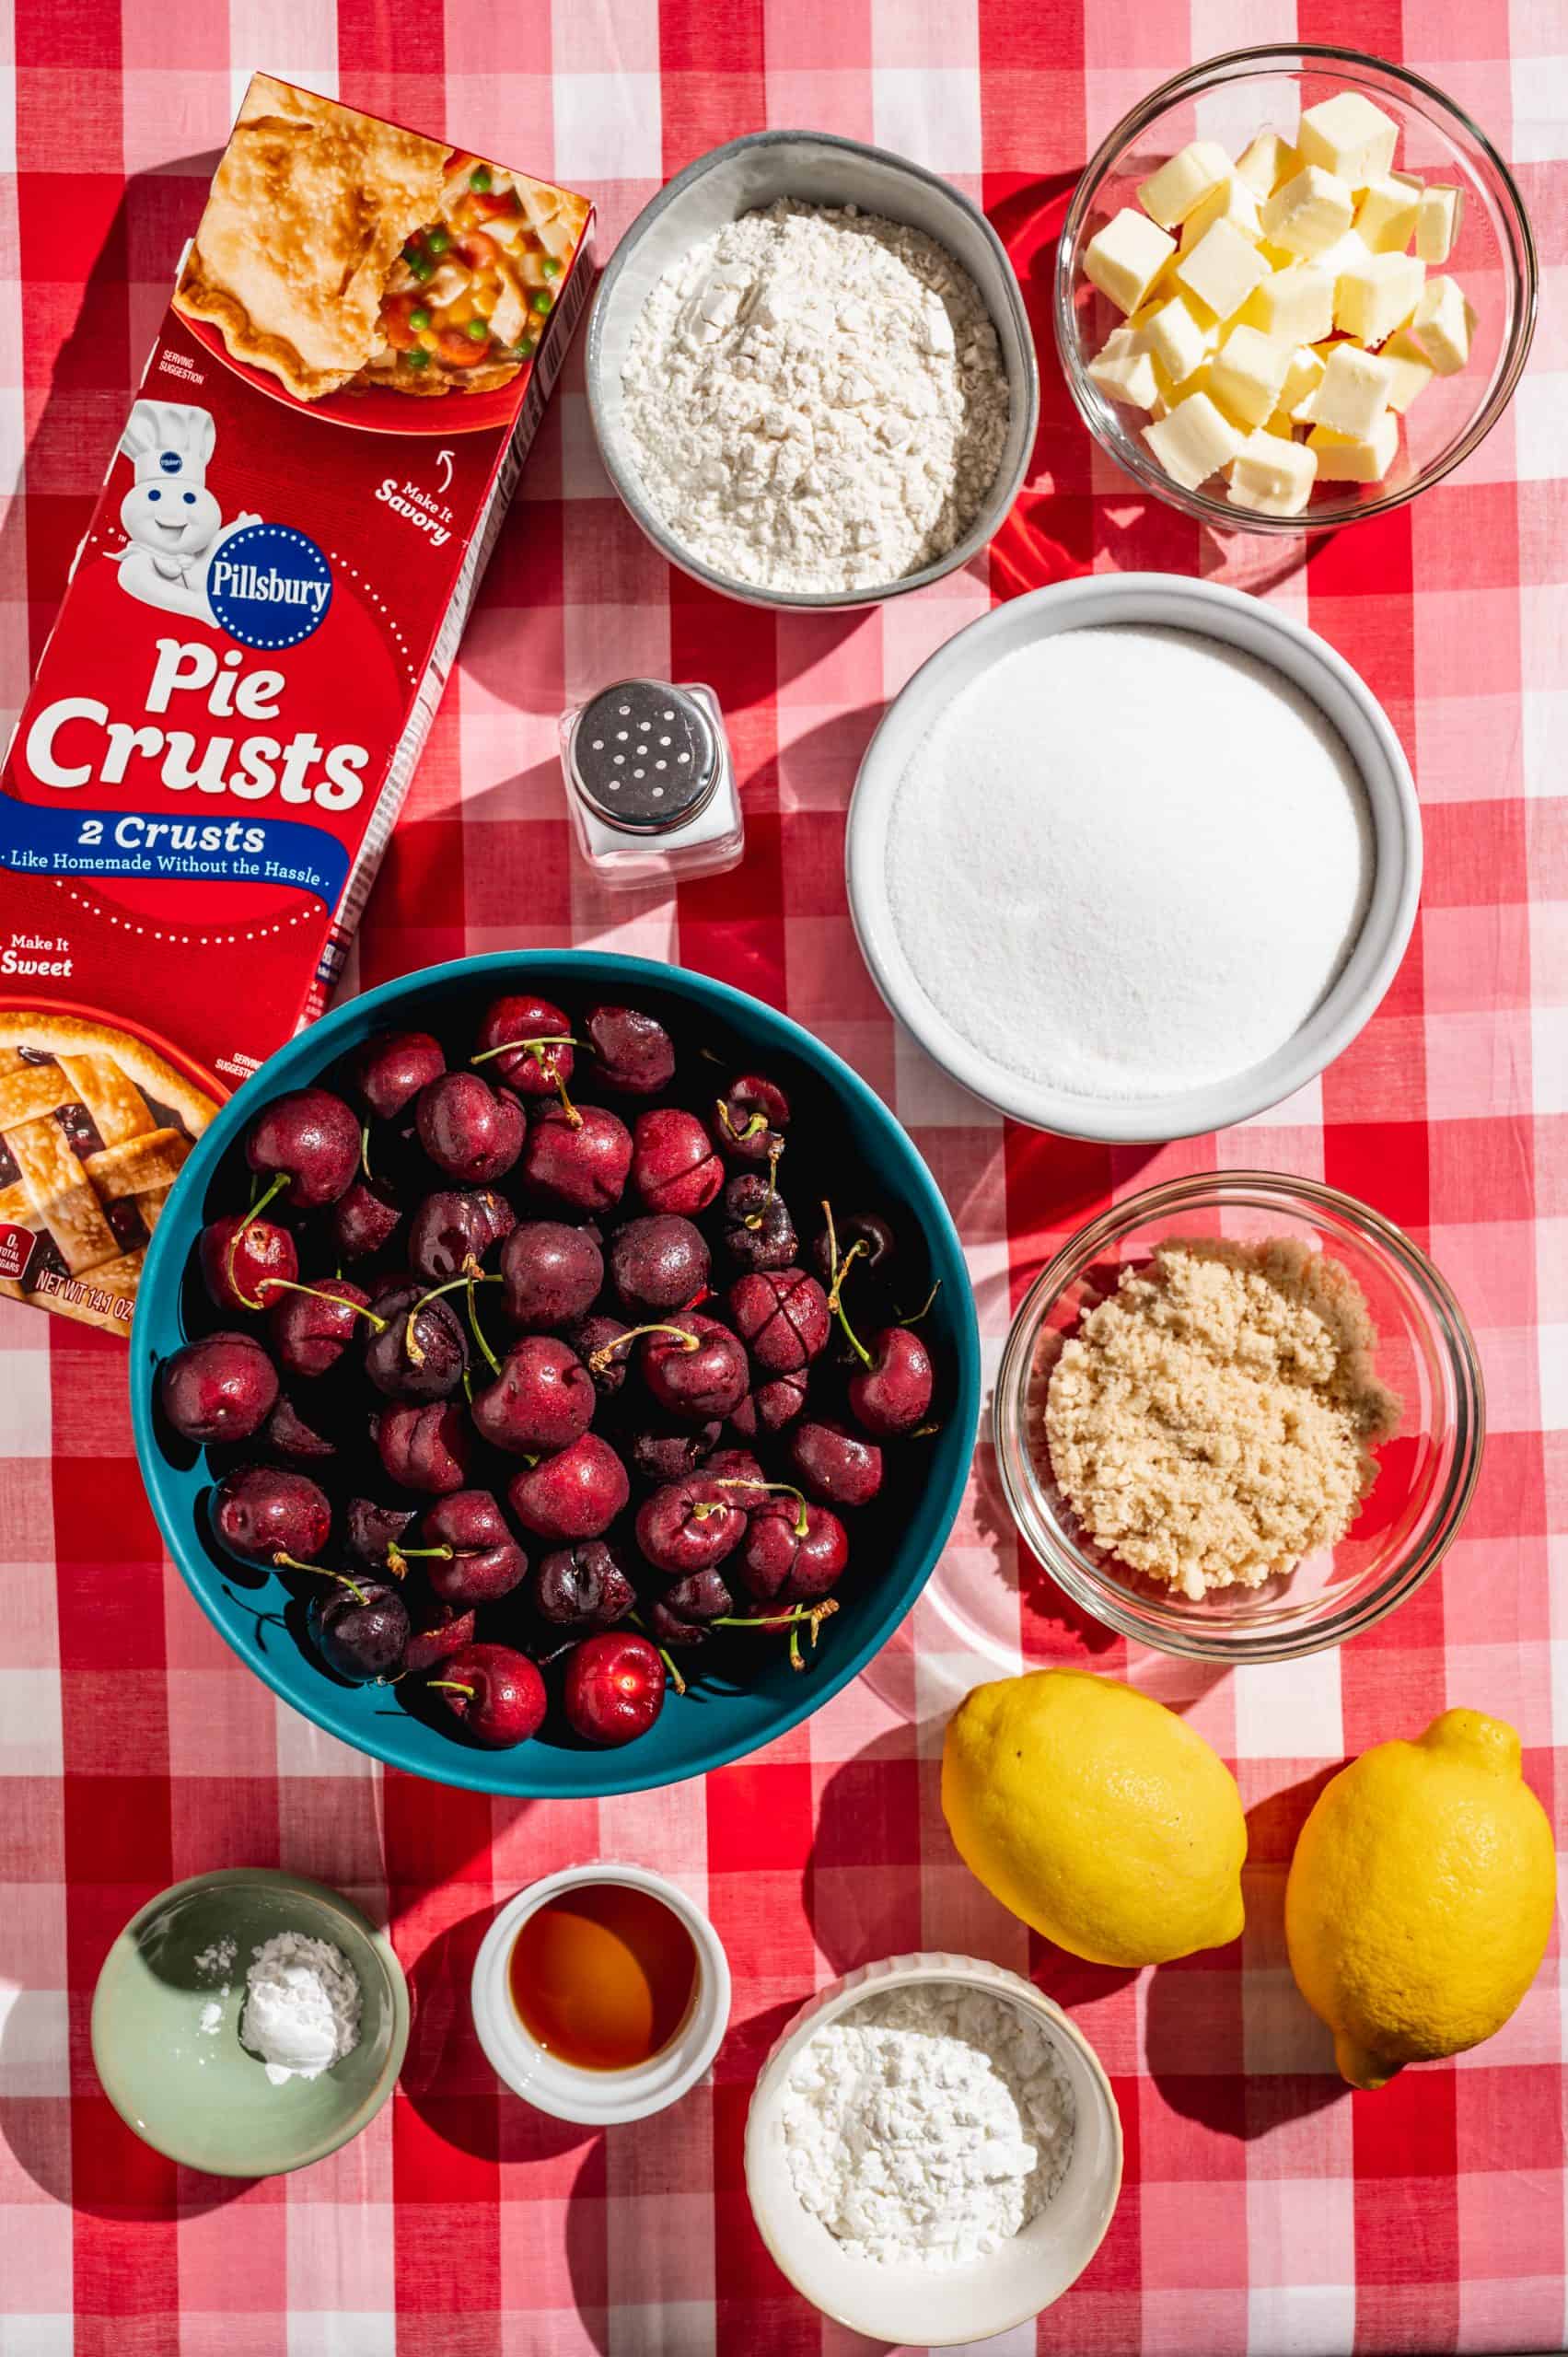 ingredients to make cherry crumble pie: cherries, pie crust, sugars, butter, flour, lemon juice, vanilla, salt